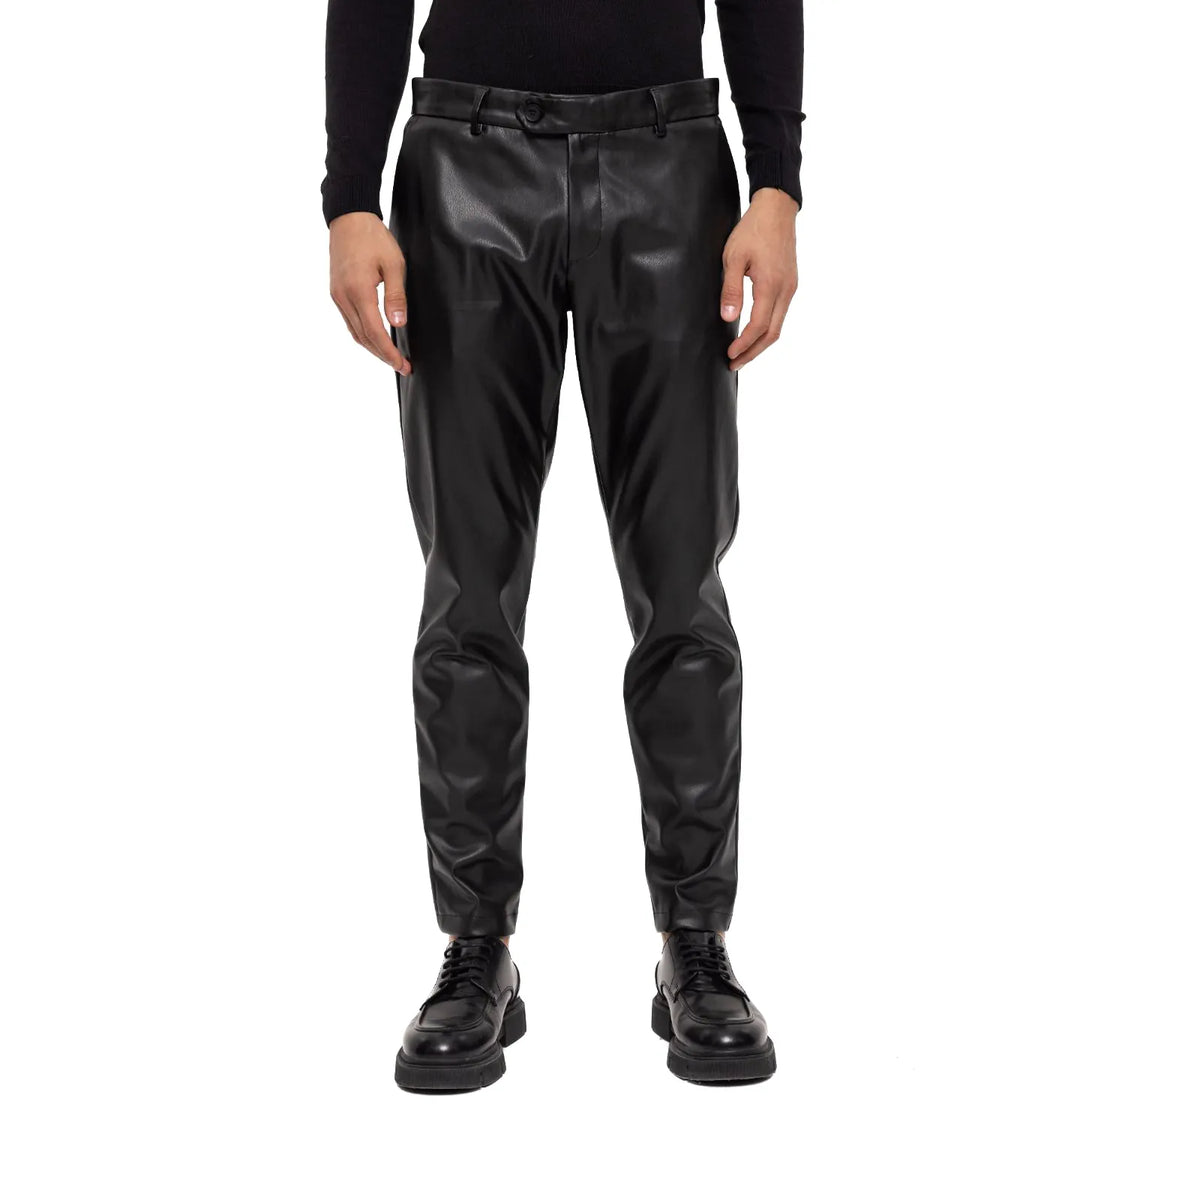 Leather trousers Emporio Armani - Jacquard logo black leather trousers -  4NP01P42P090999